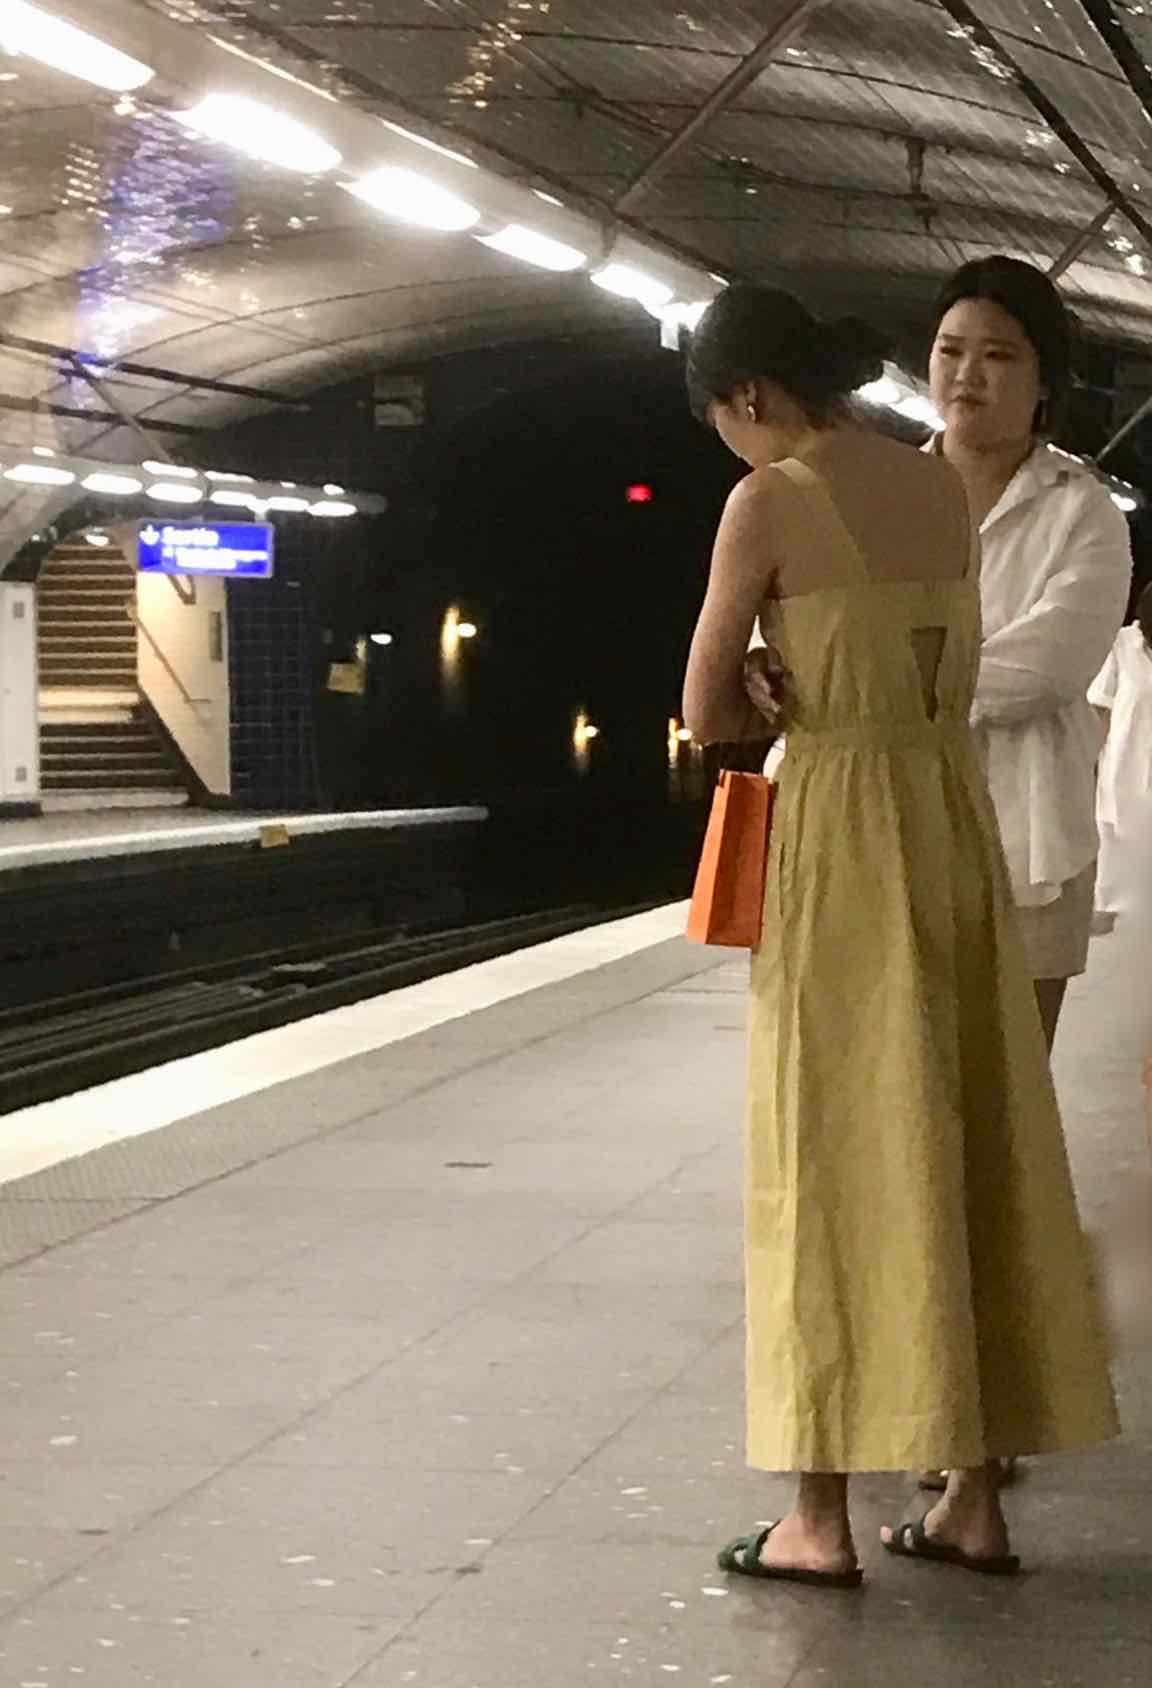 2 women in Paris Metro, one wearing yellow sundress, other wearing white jacket and skirt